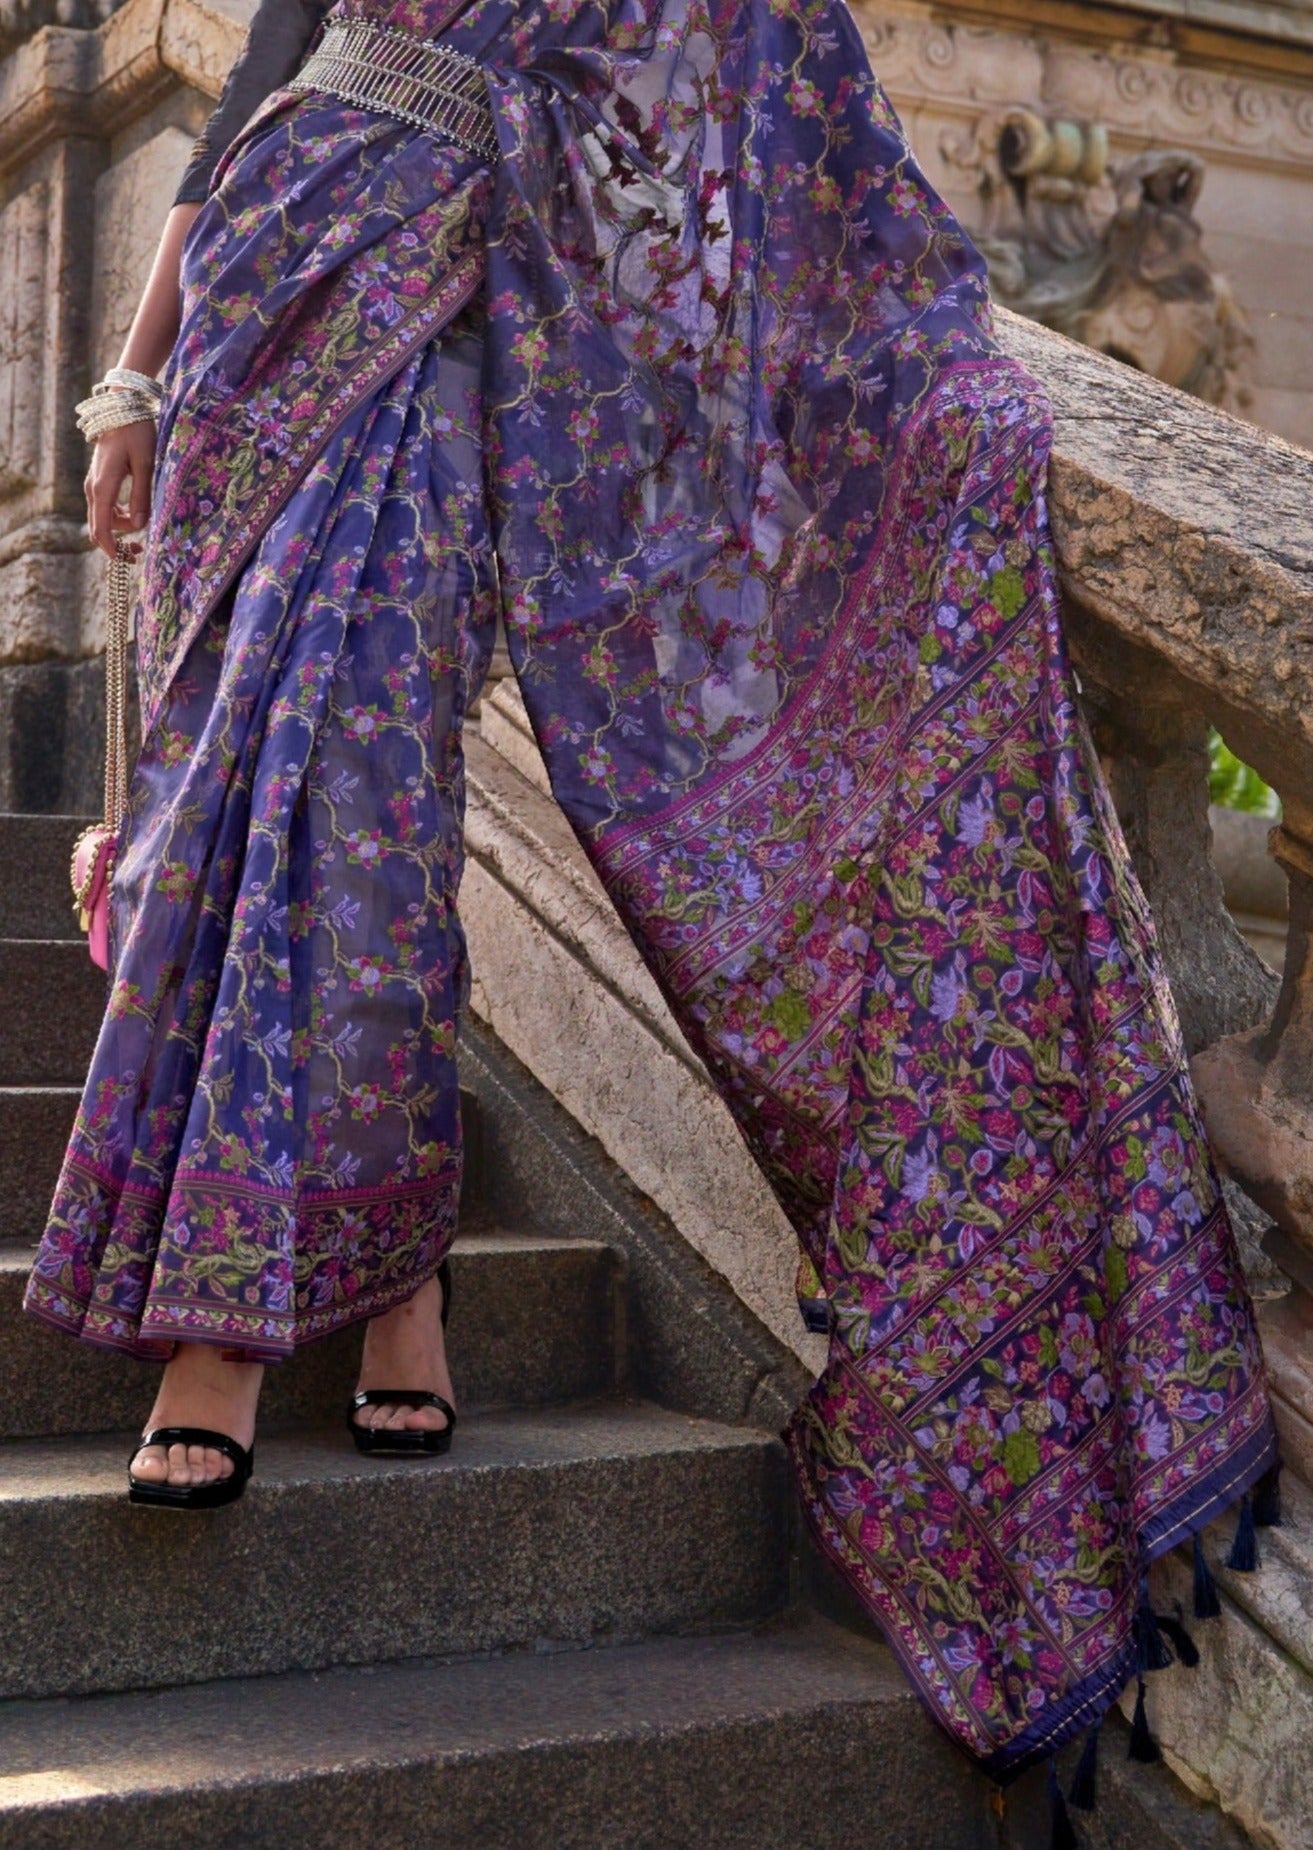 Pure handloom kashmiri organza embroidered violet purple saree online for bride uk.